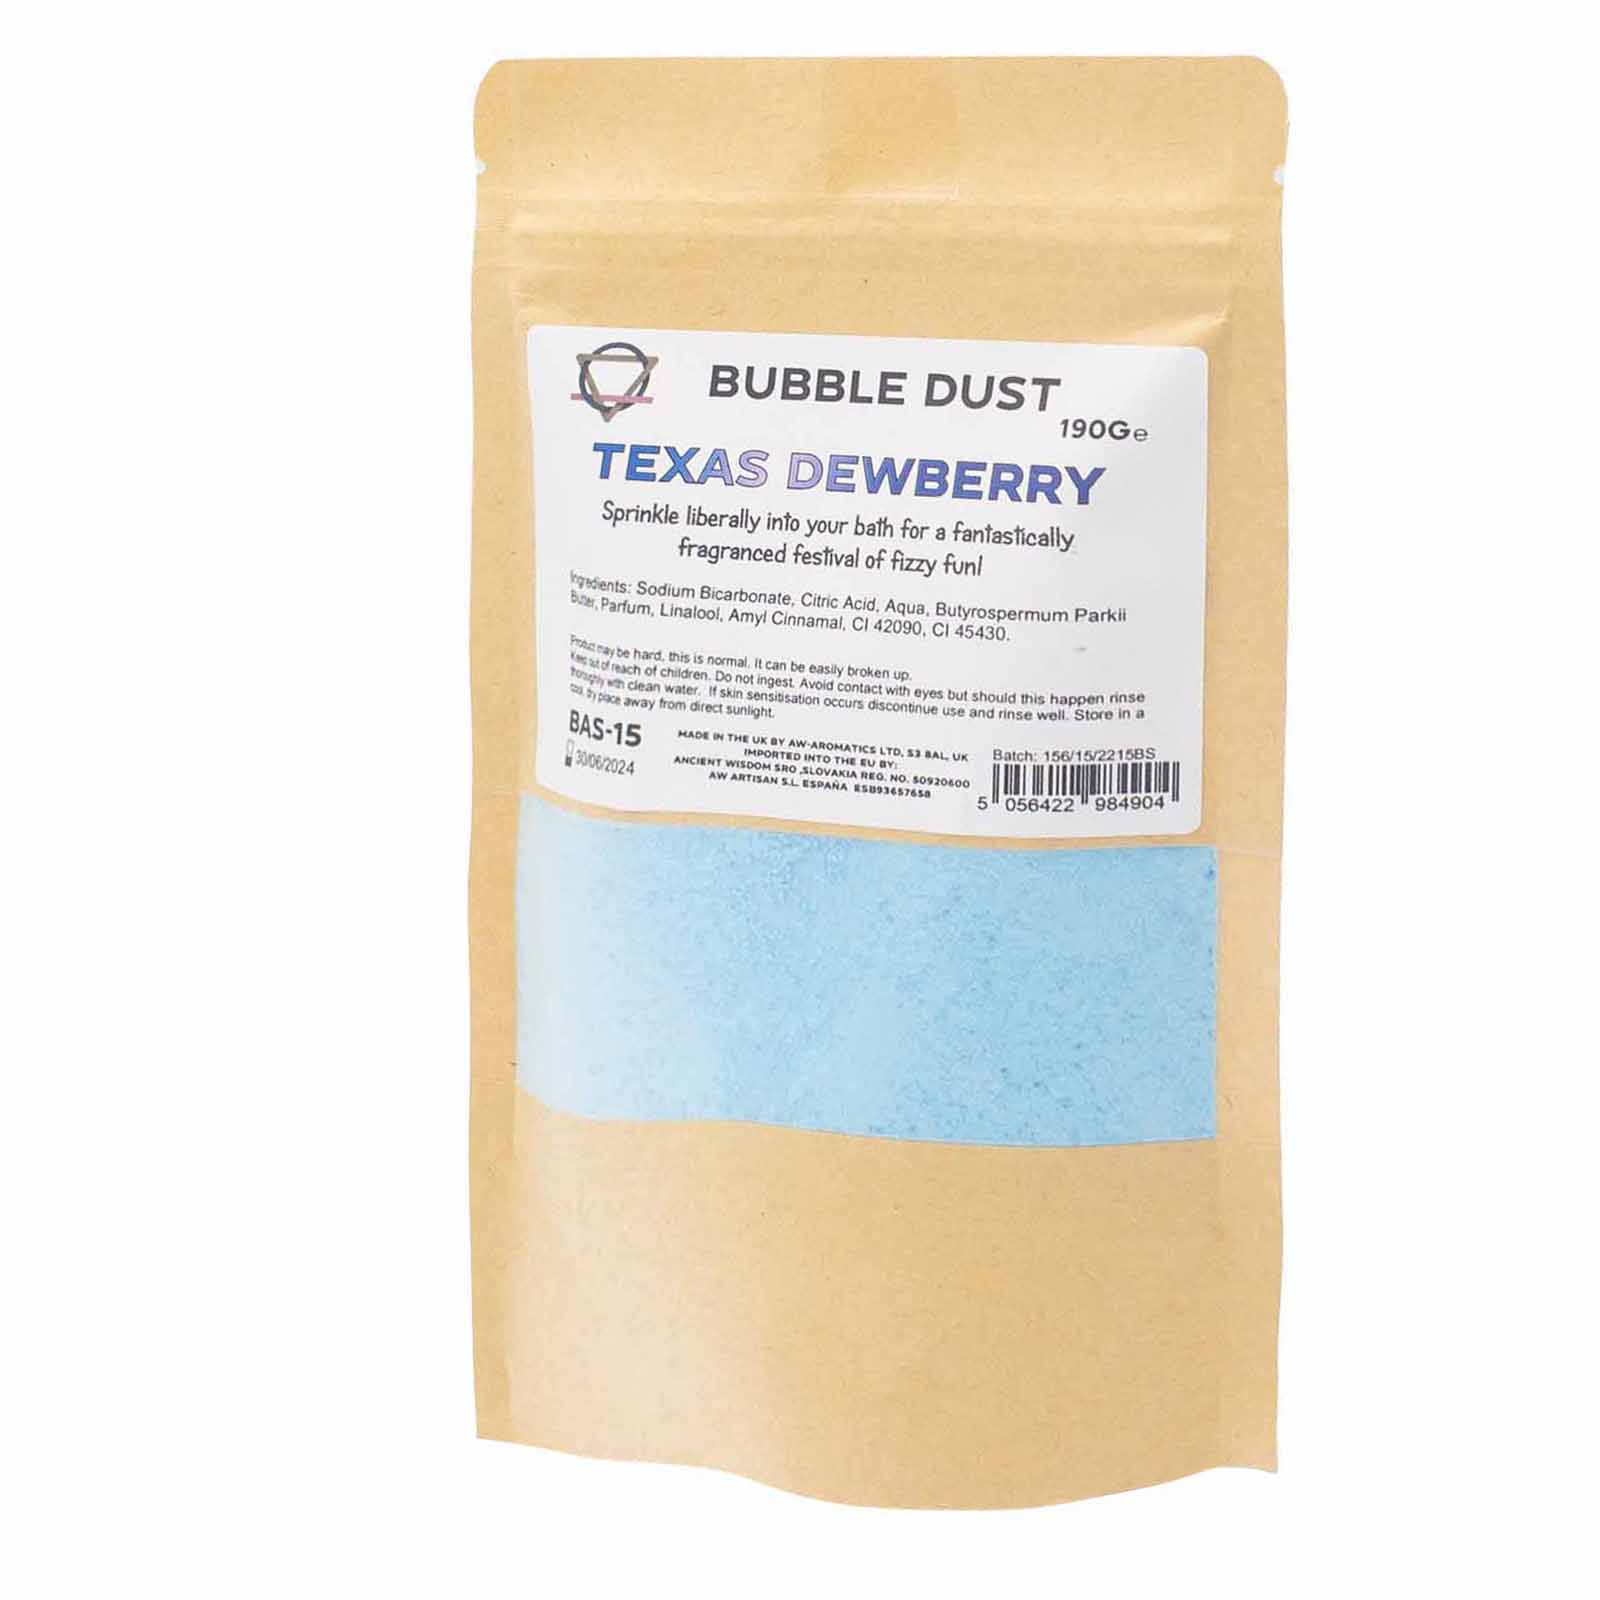 View Texas Dewberry Bath Dust 190g information